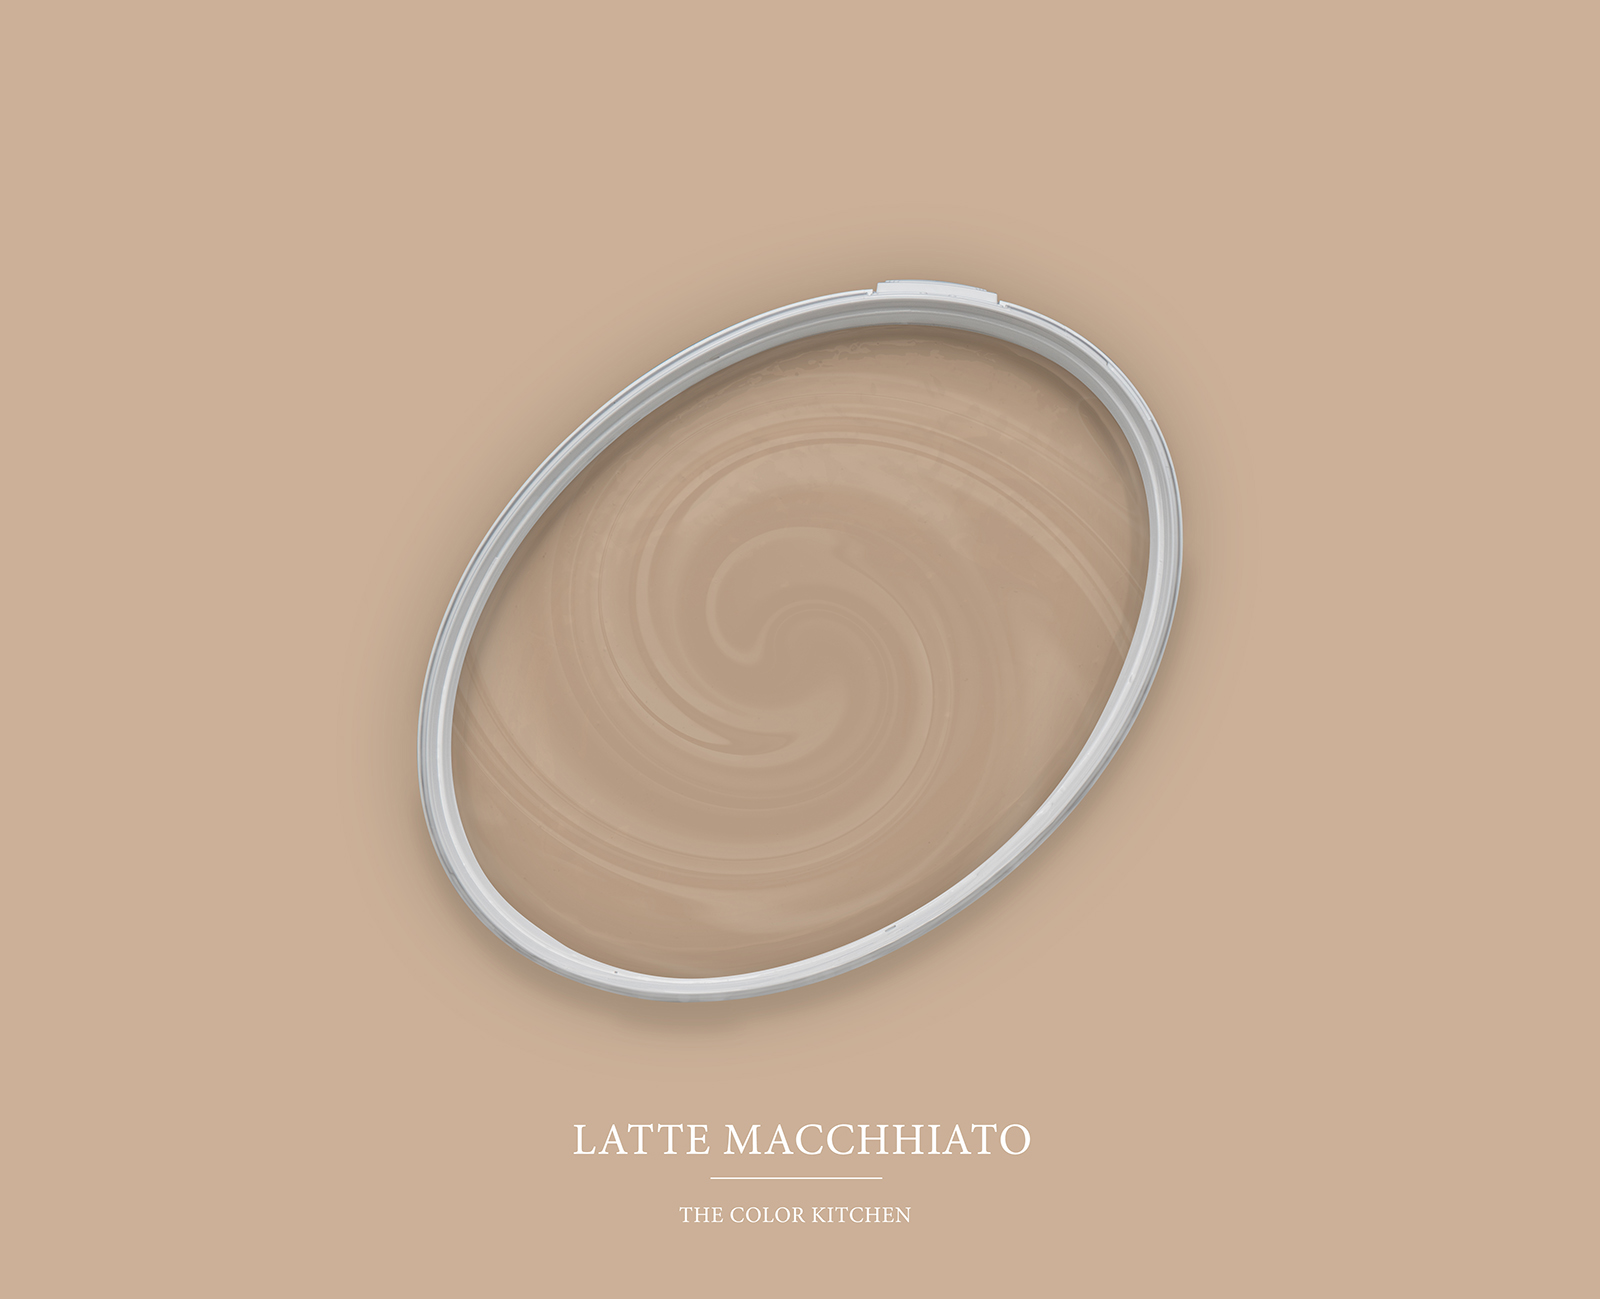         Wandfarbe in natürlichem Beige »Latte Macchhiato« TCK6010 – 2,5 Liter
    